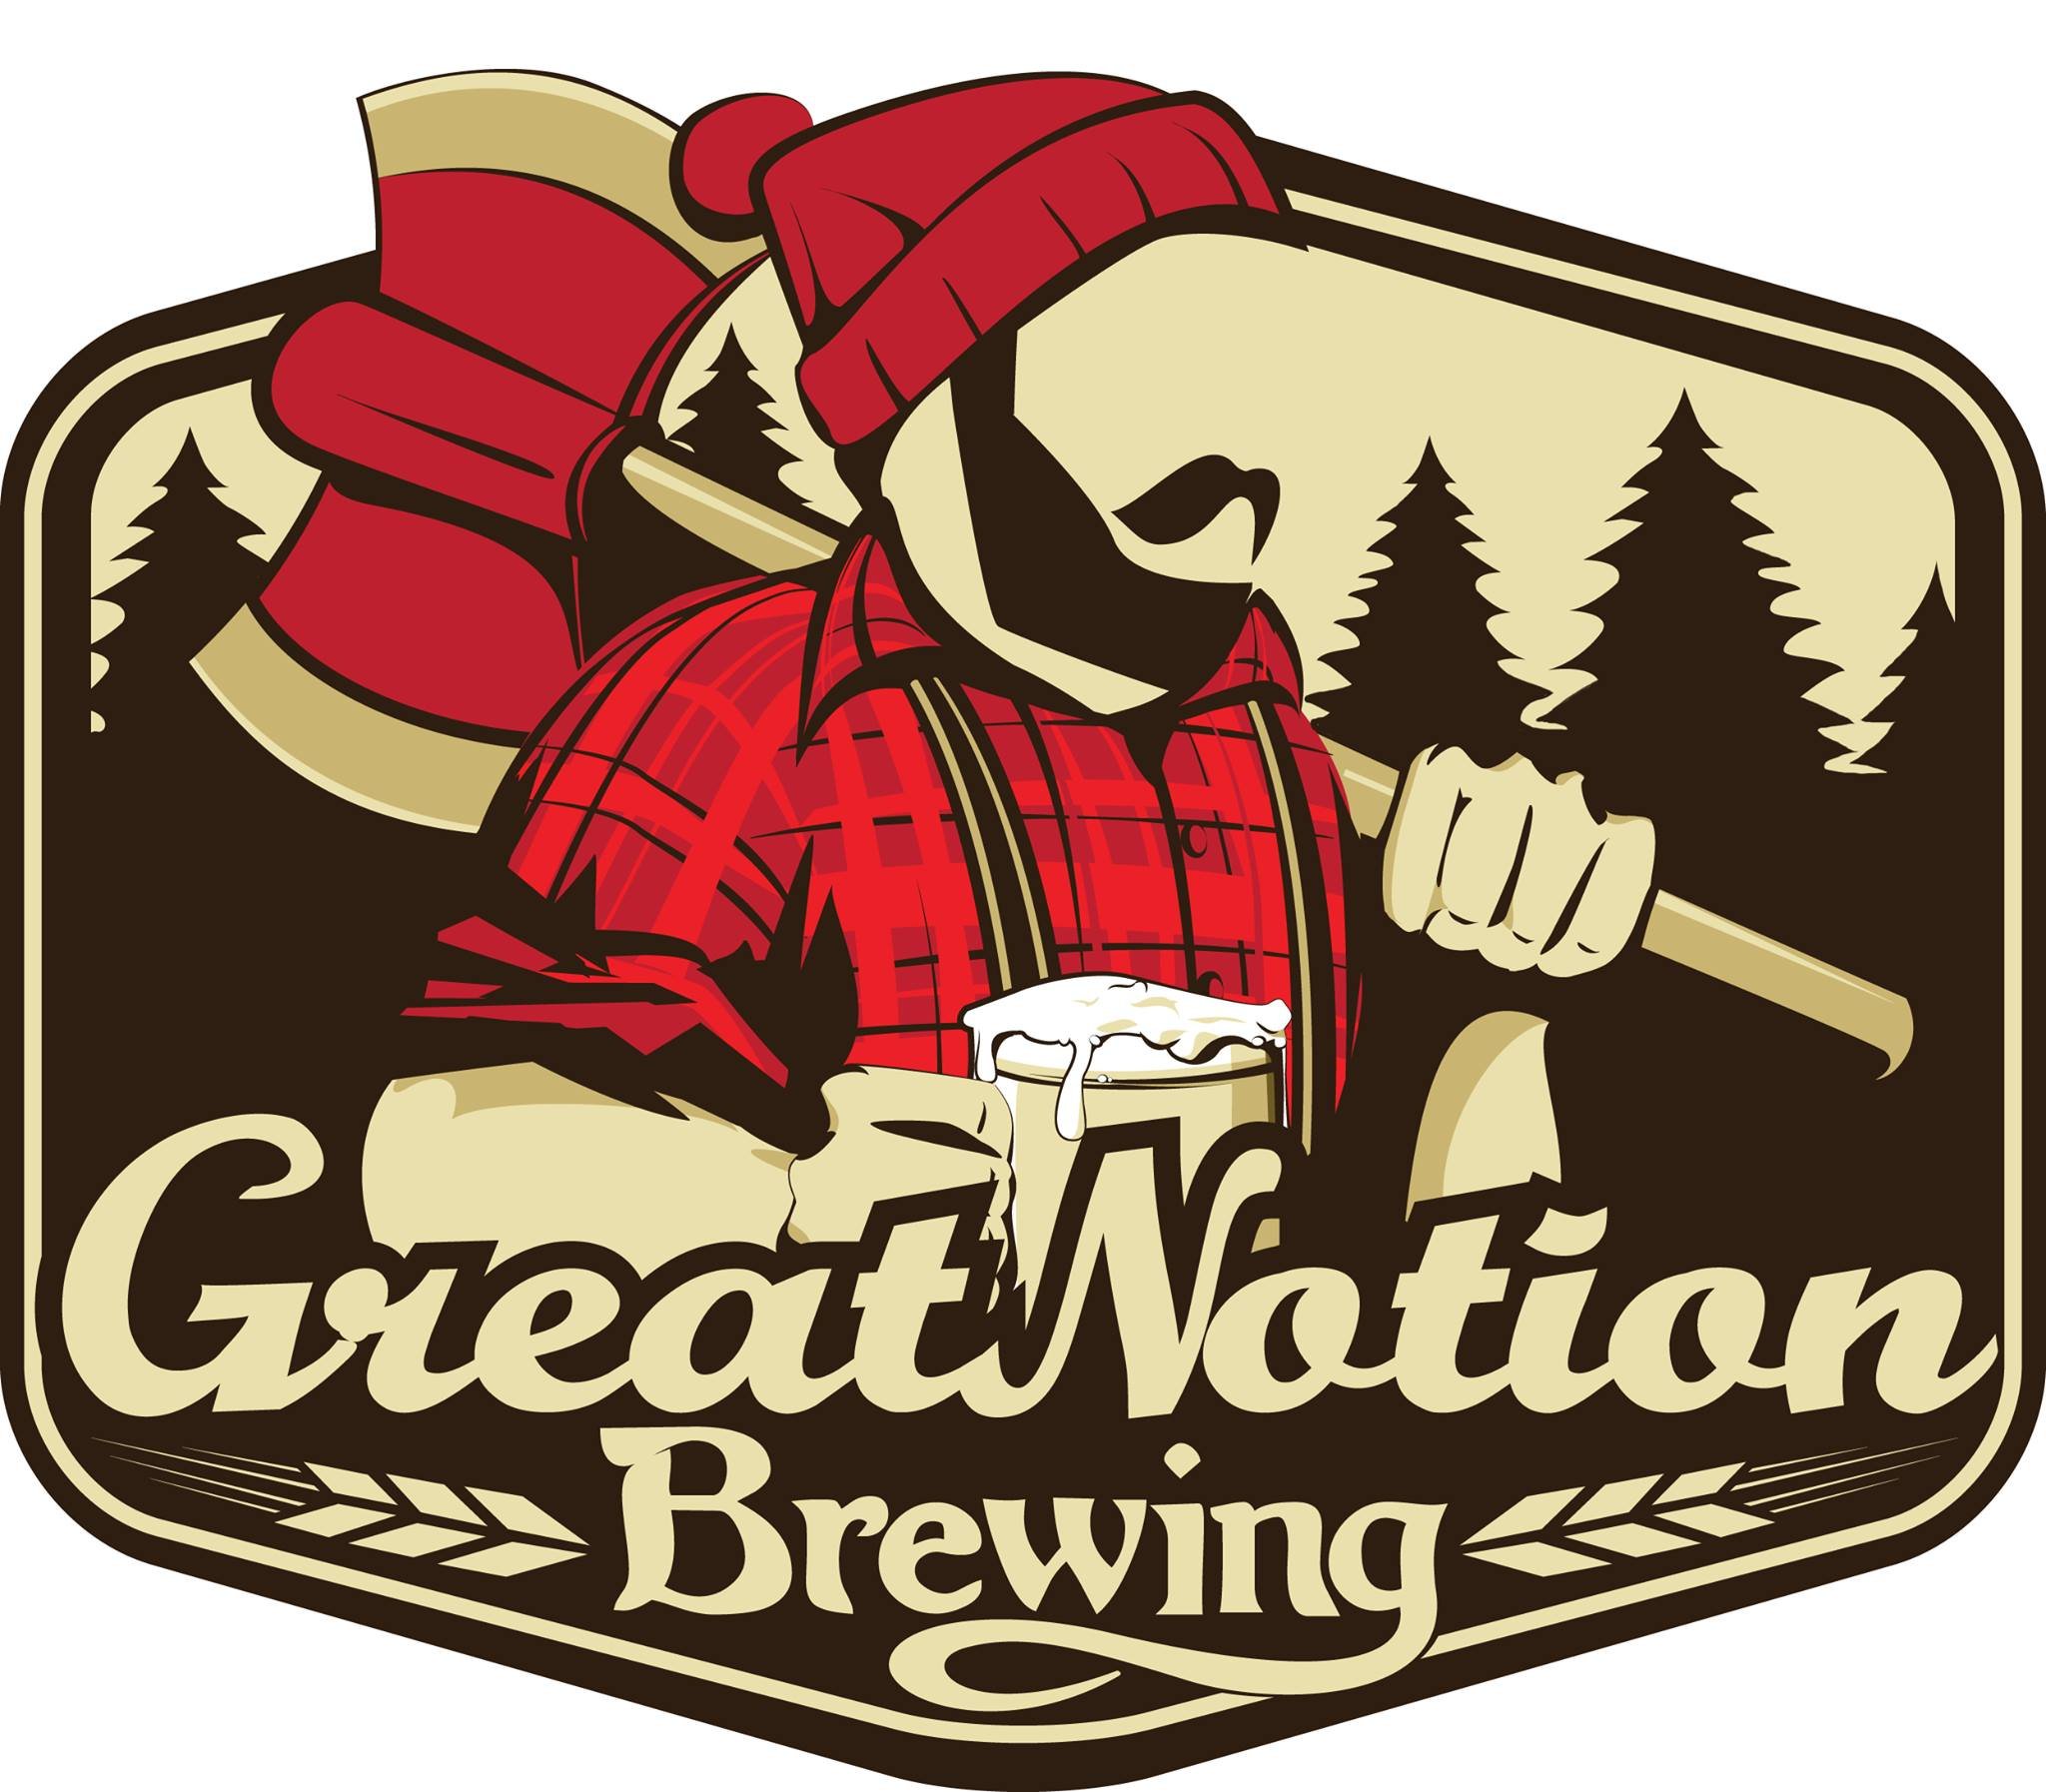 Great-Notion-Brewing-logo.jpg